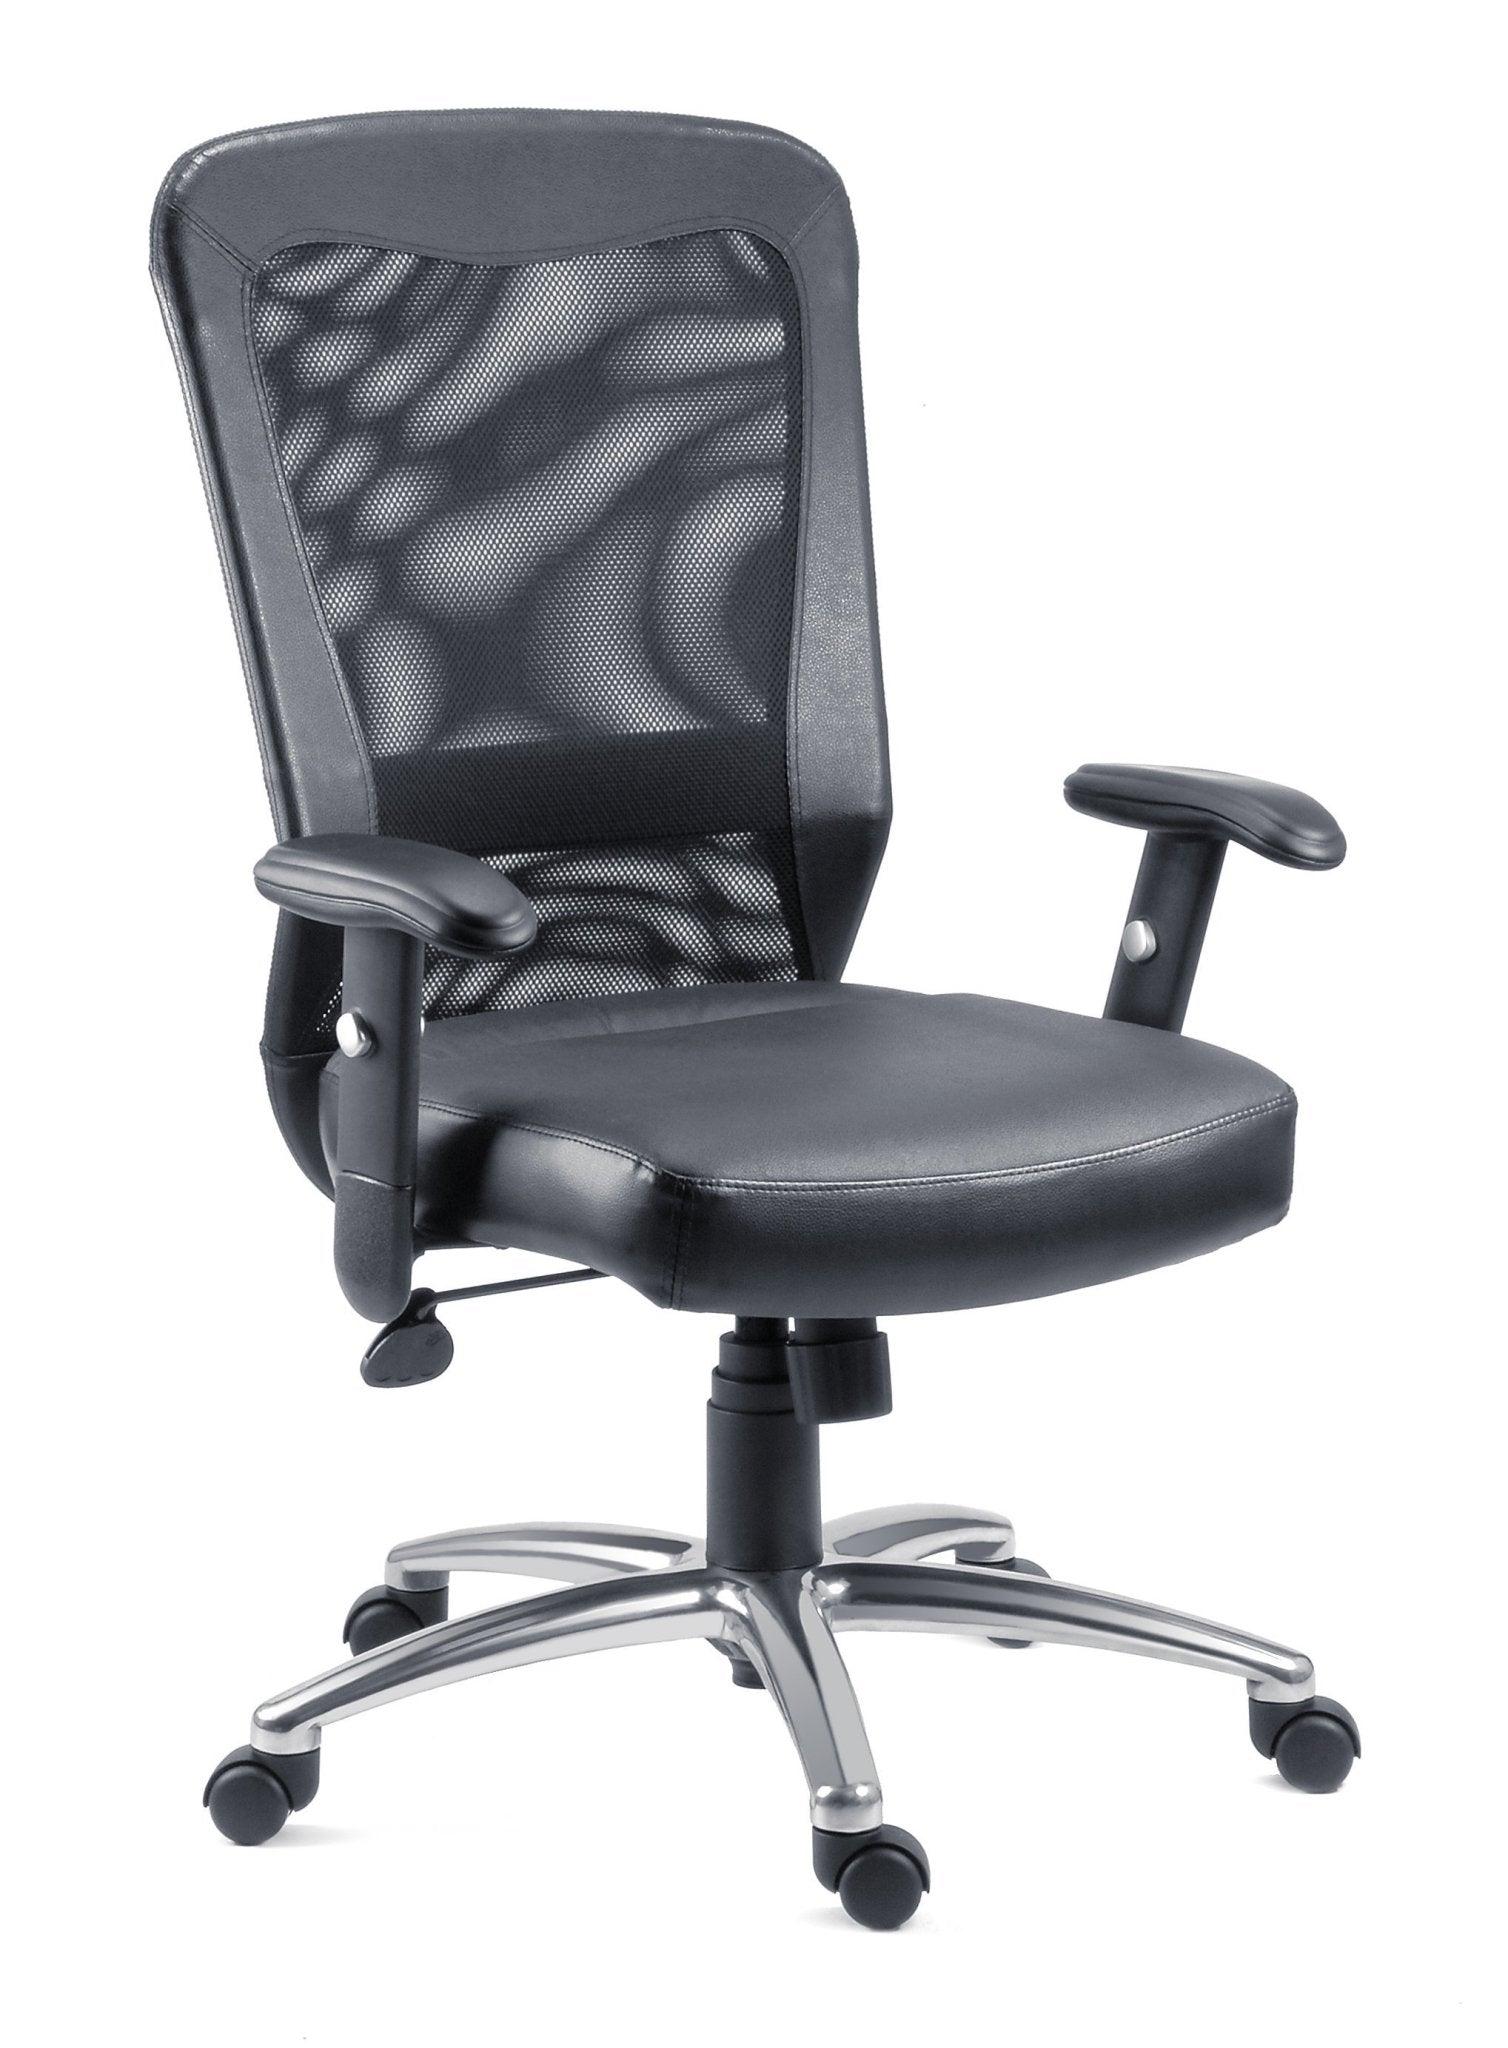 Breeze office chair - crimblefest furniture - image 1